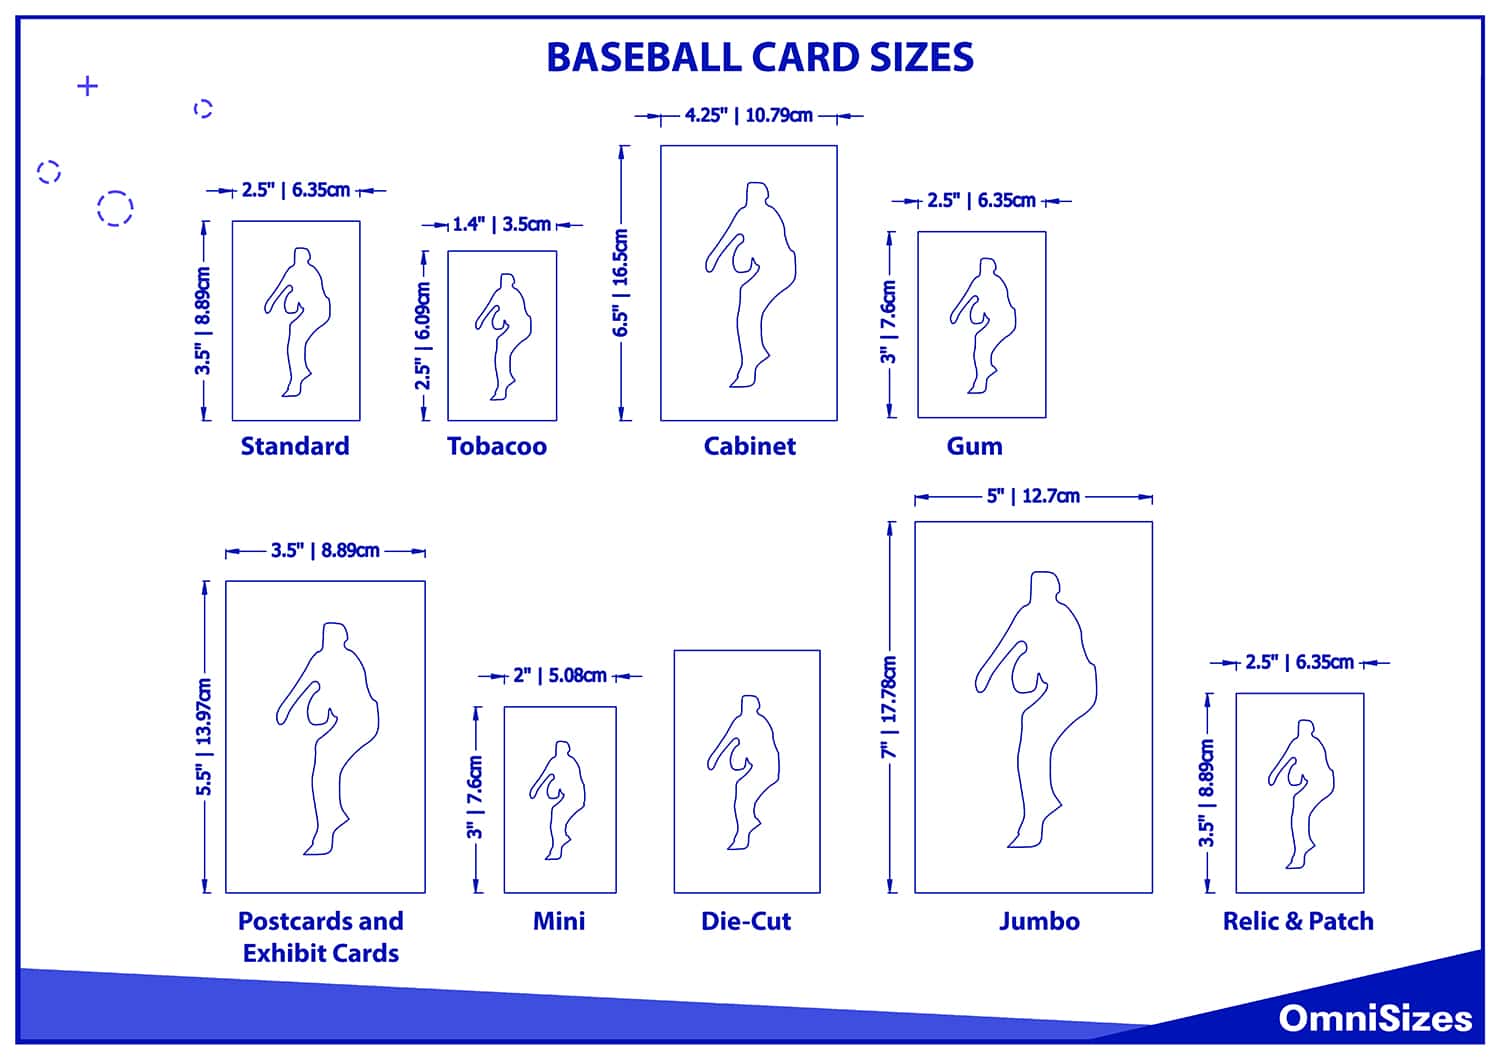 Baseball card sizes